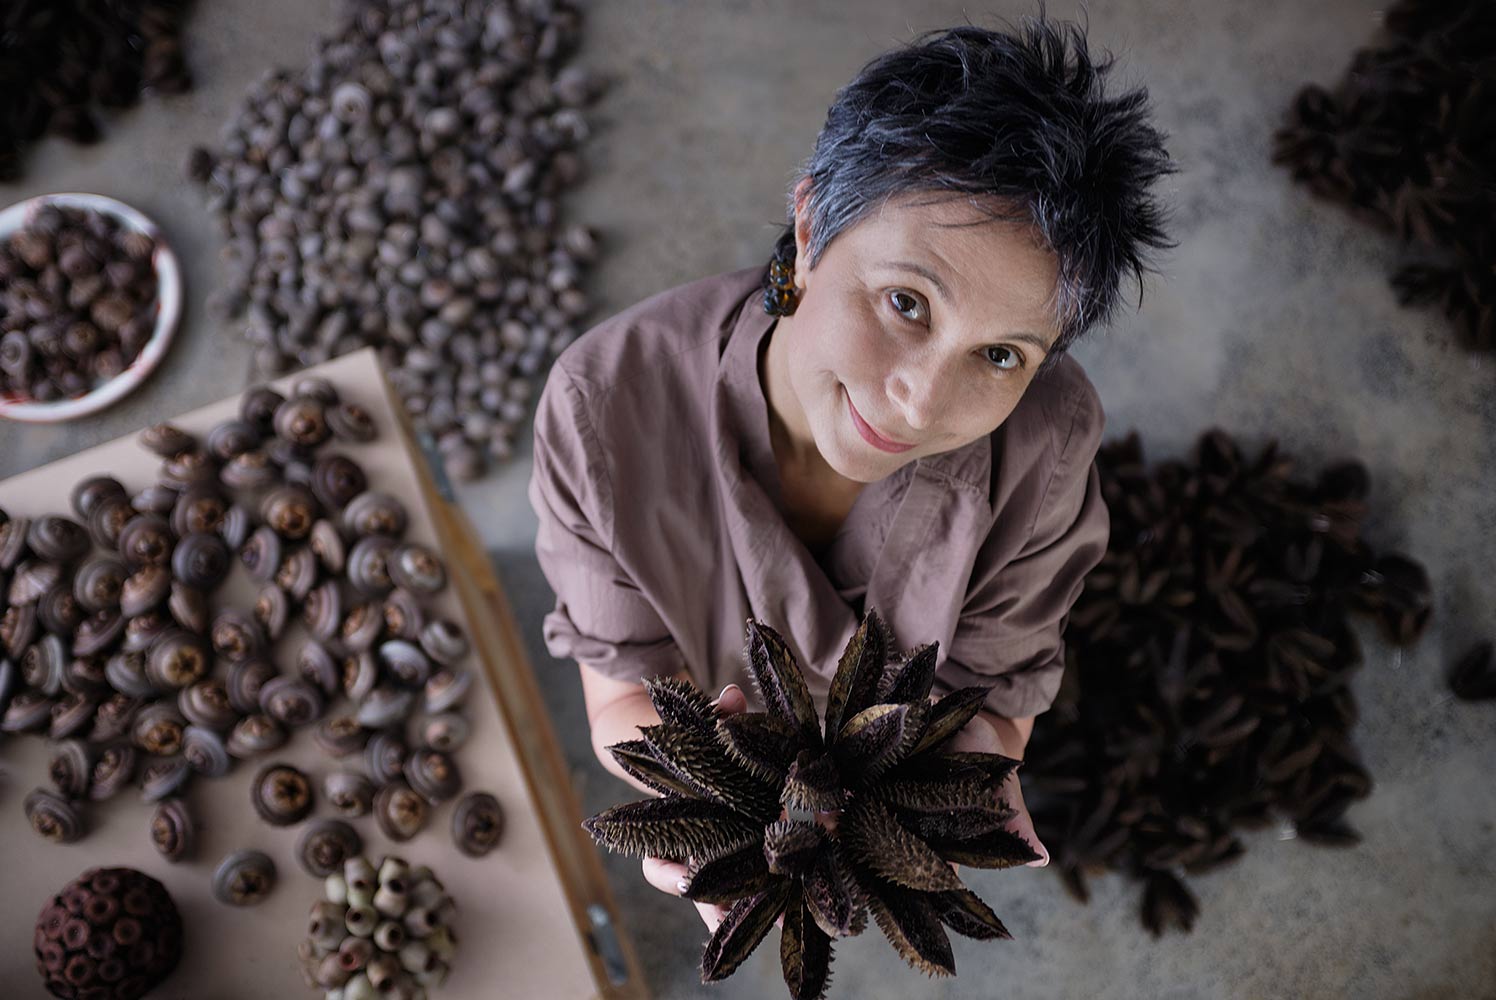 03_Maria-Fernanda-Cardoso-with-Eucalyptus-Gumnut-Spheres-2021--Photo-credit-Jillian-Nalty.-Courtesy-of-the-artist-and-Sullivan-+-Strumpf